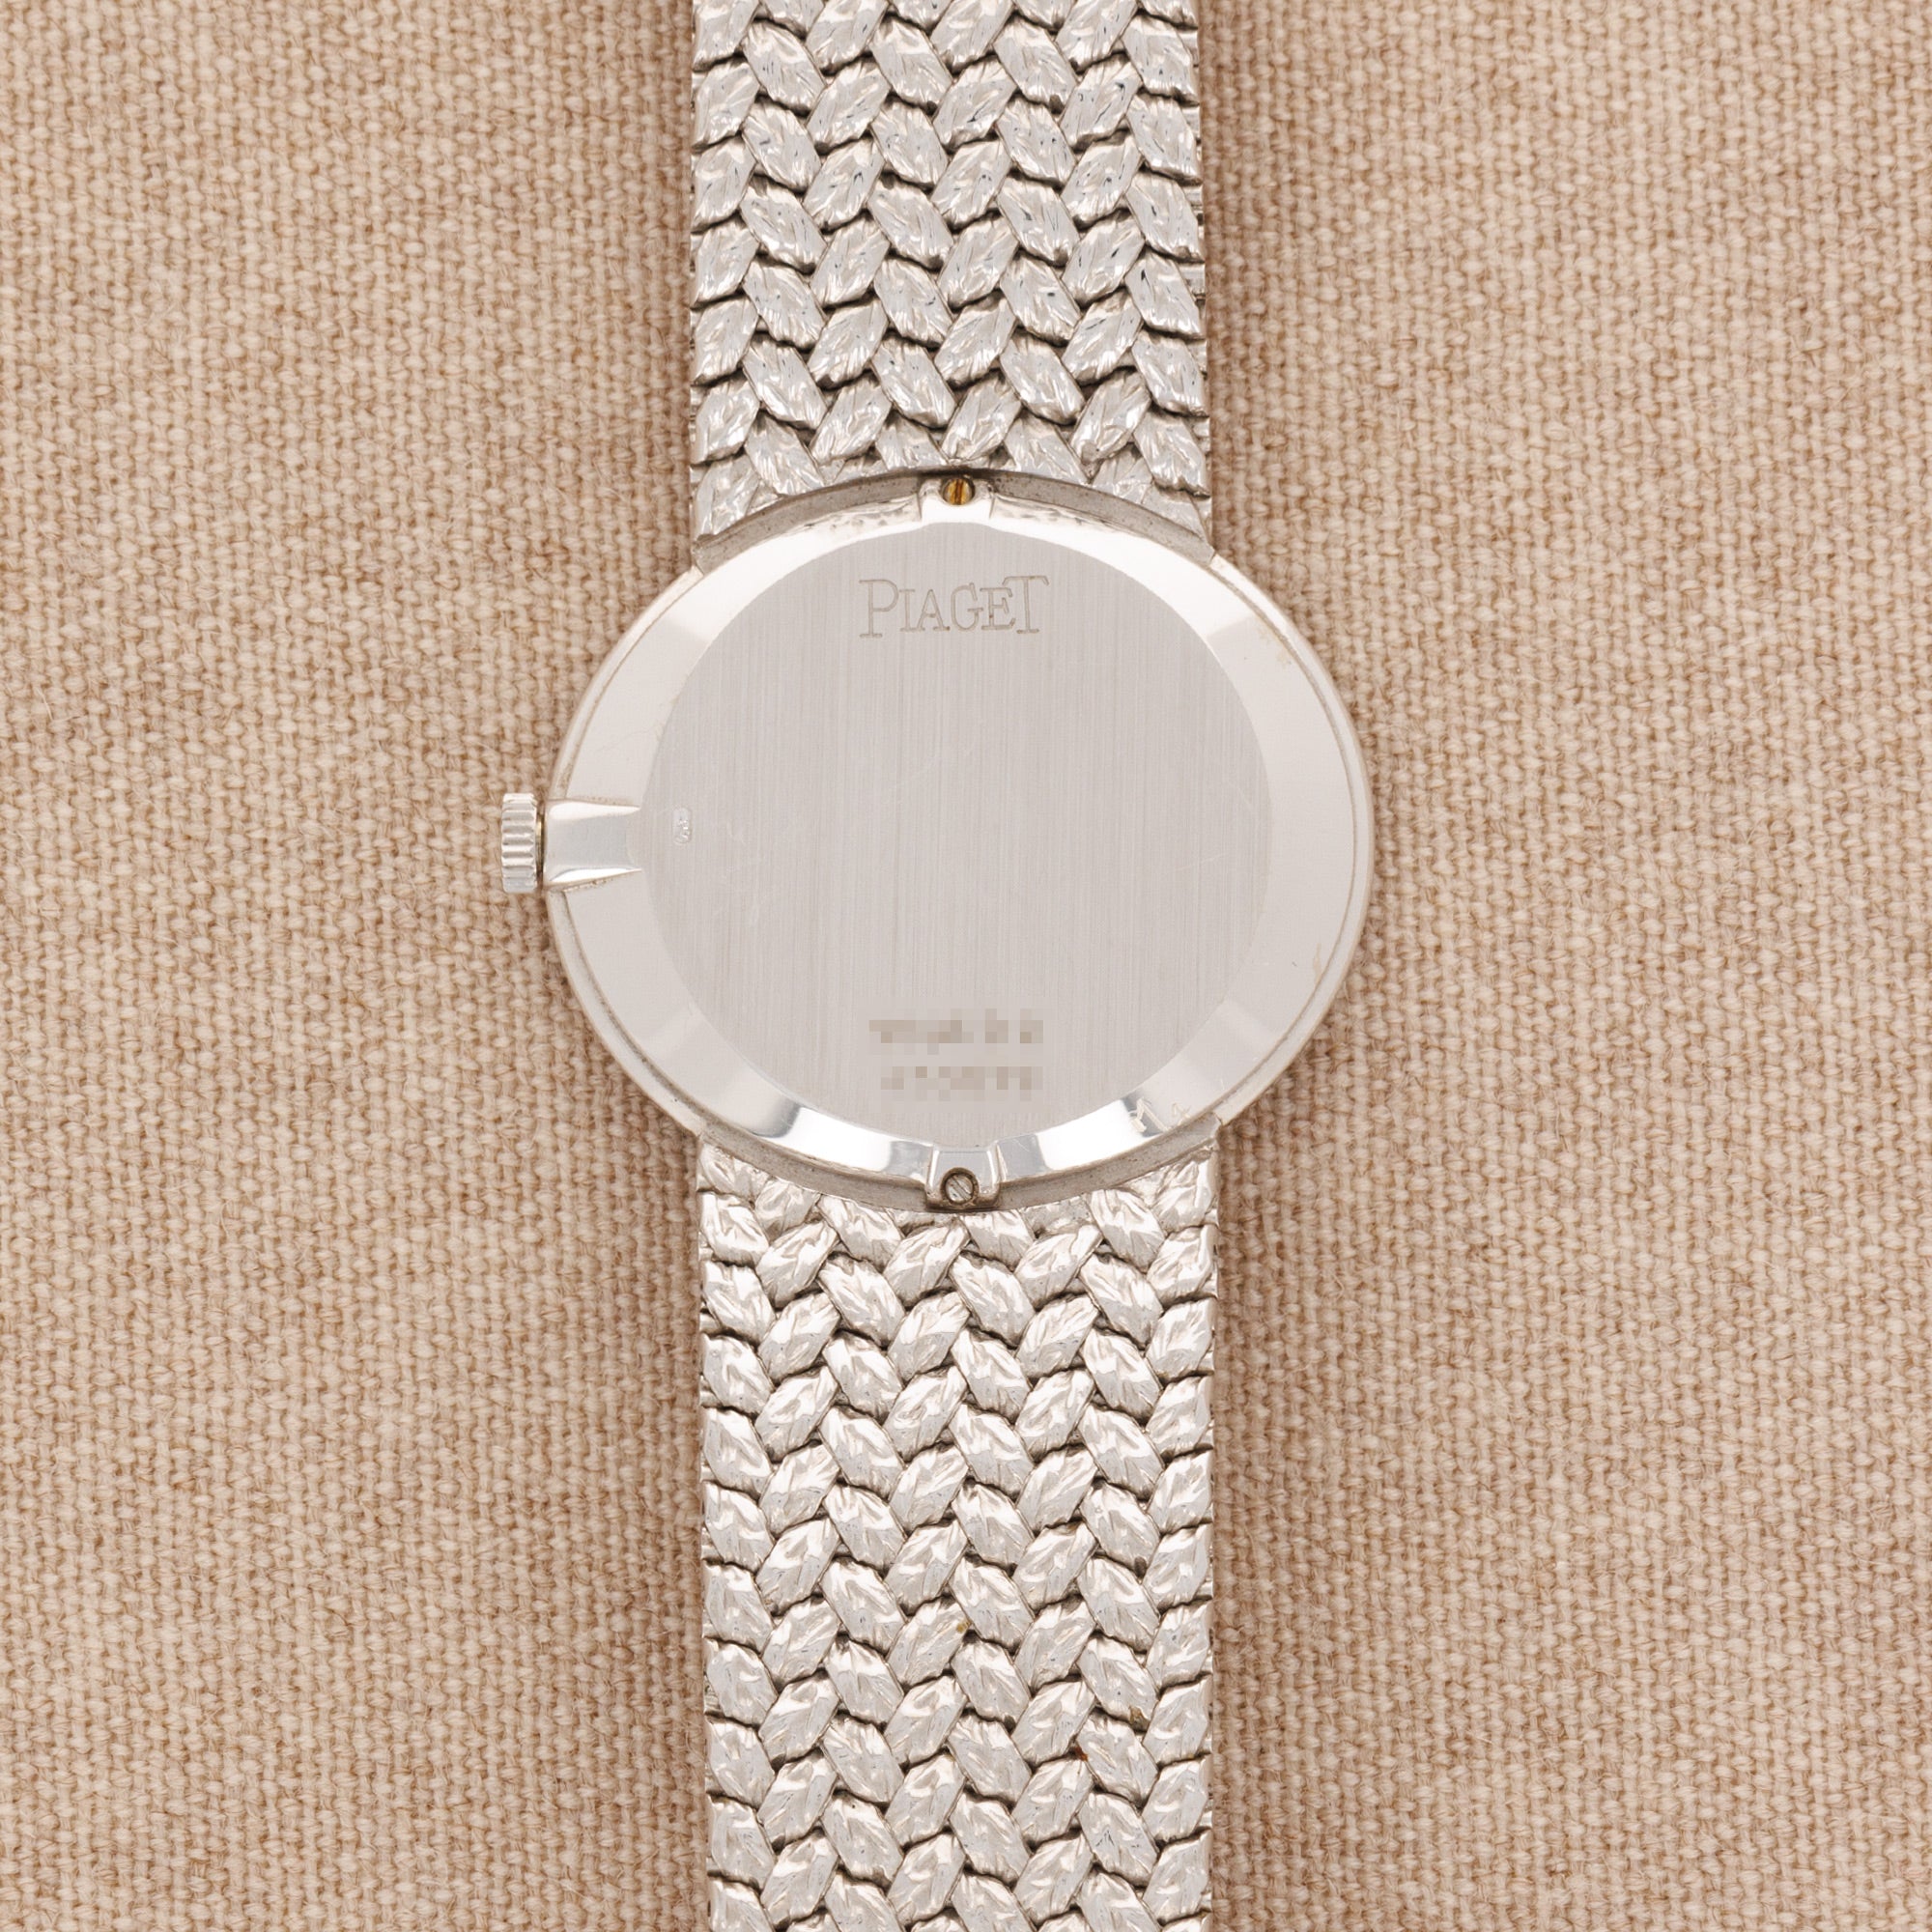 Piaget - Piaget White Gold Lapis Diamond Watch Ref. 9806 - The Keystone Watches